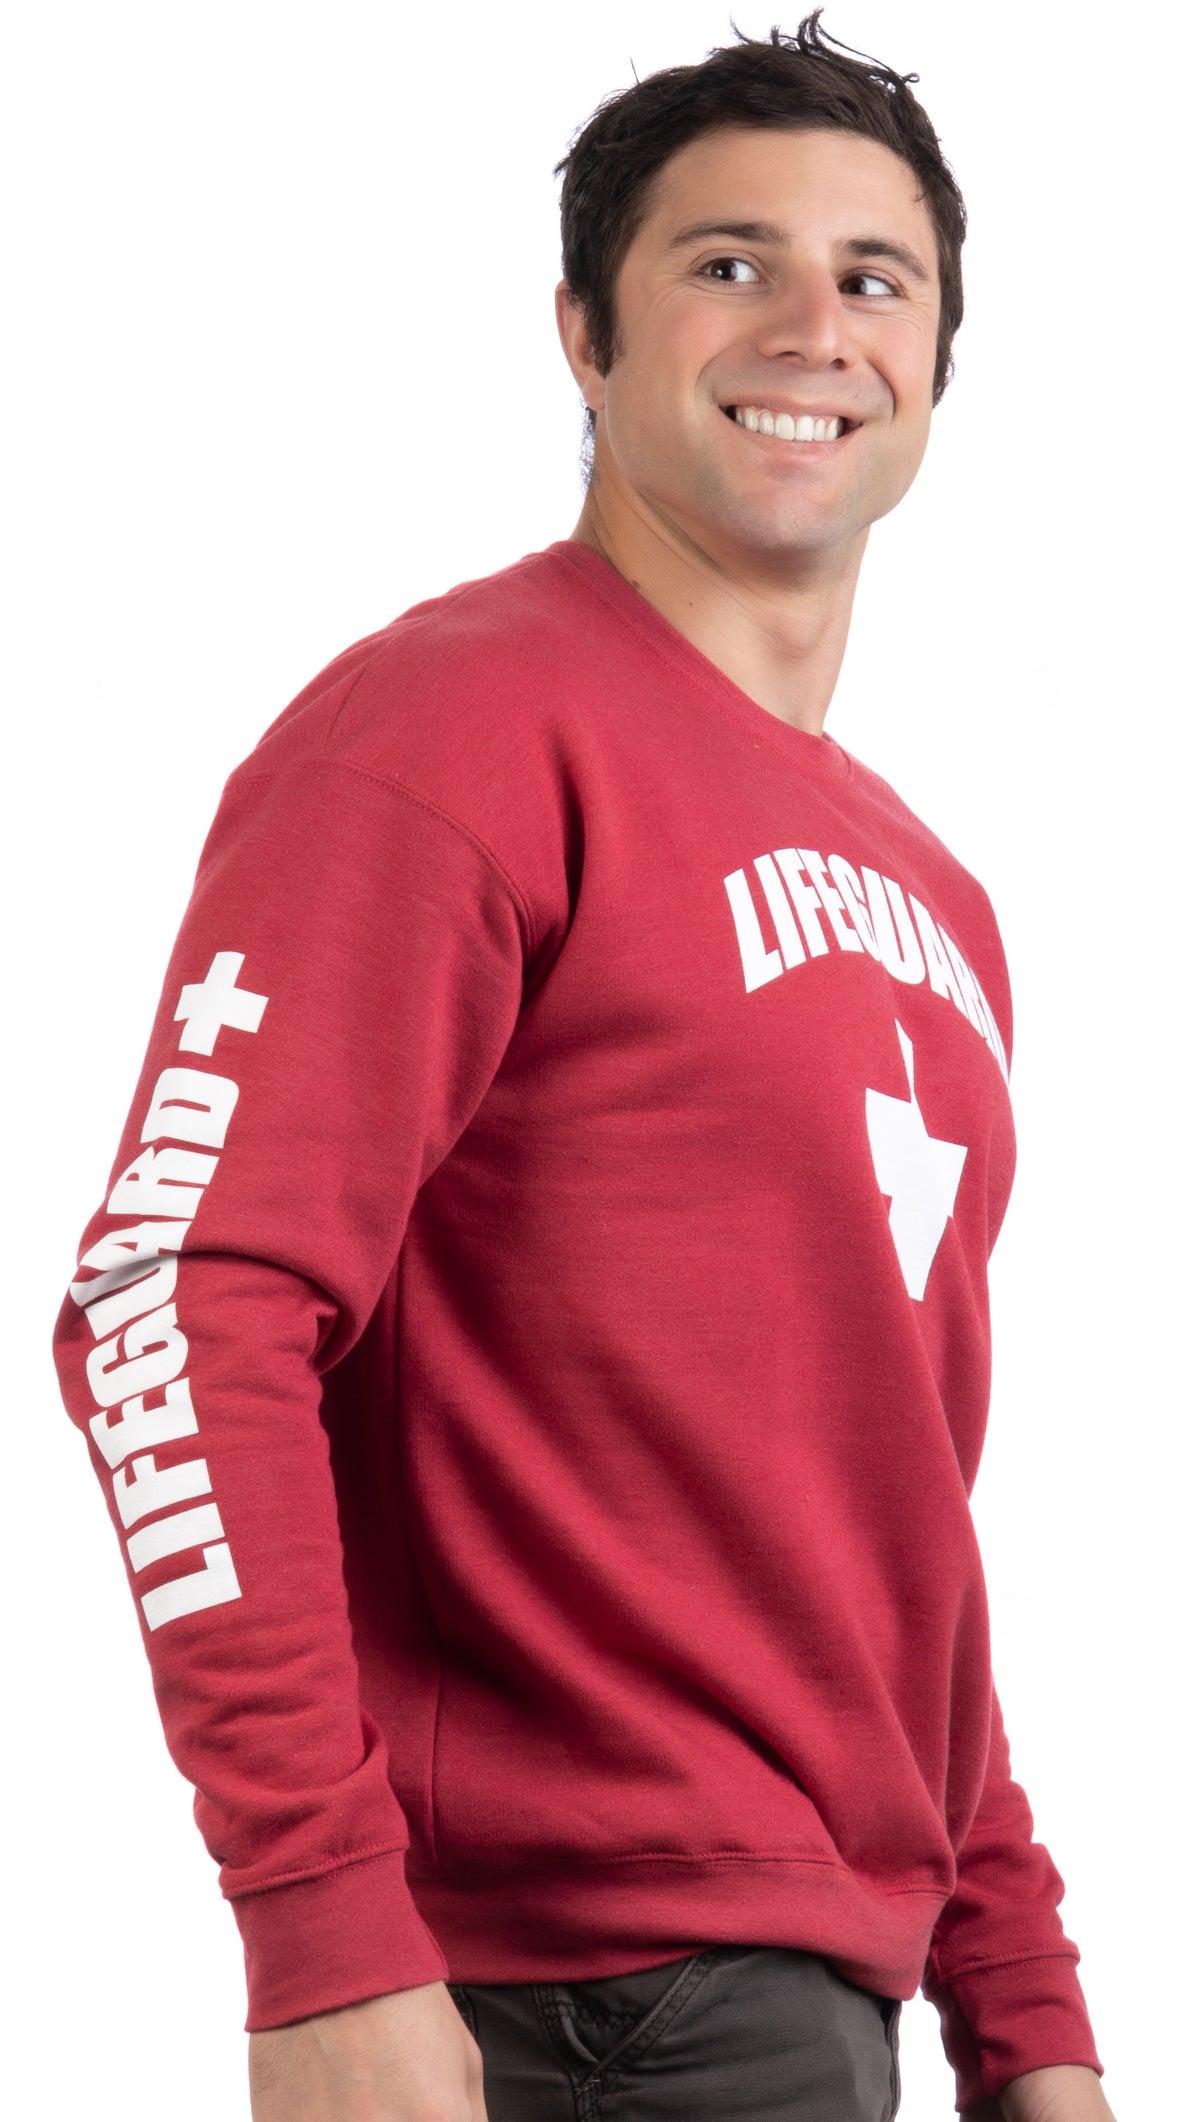 LIFEGUARD | Red Unisex Uniform Fleece Sweatshirt Crewneck Sweater for Men Women